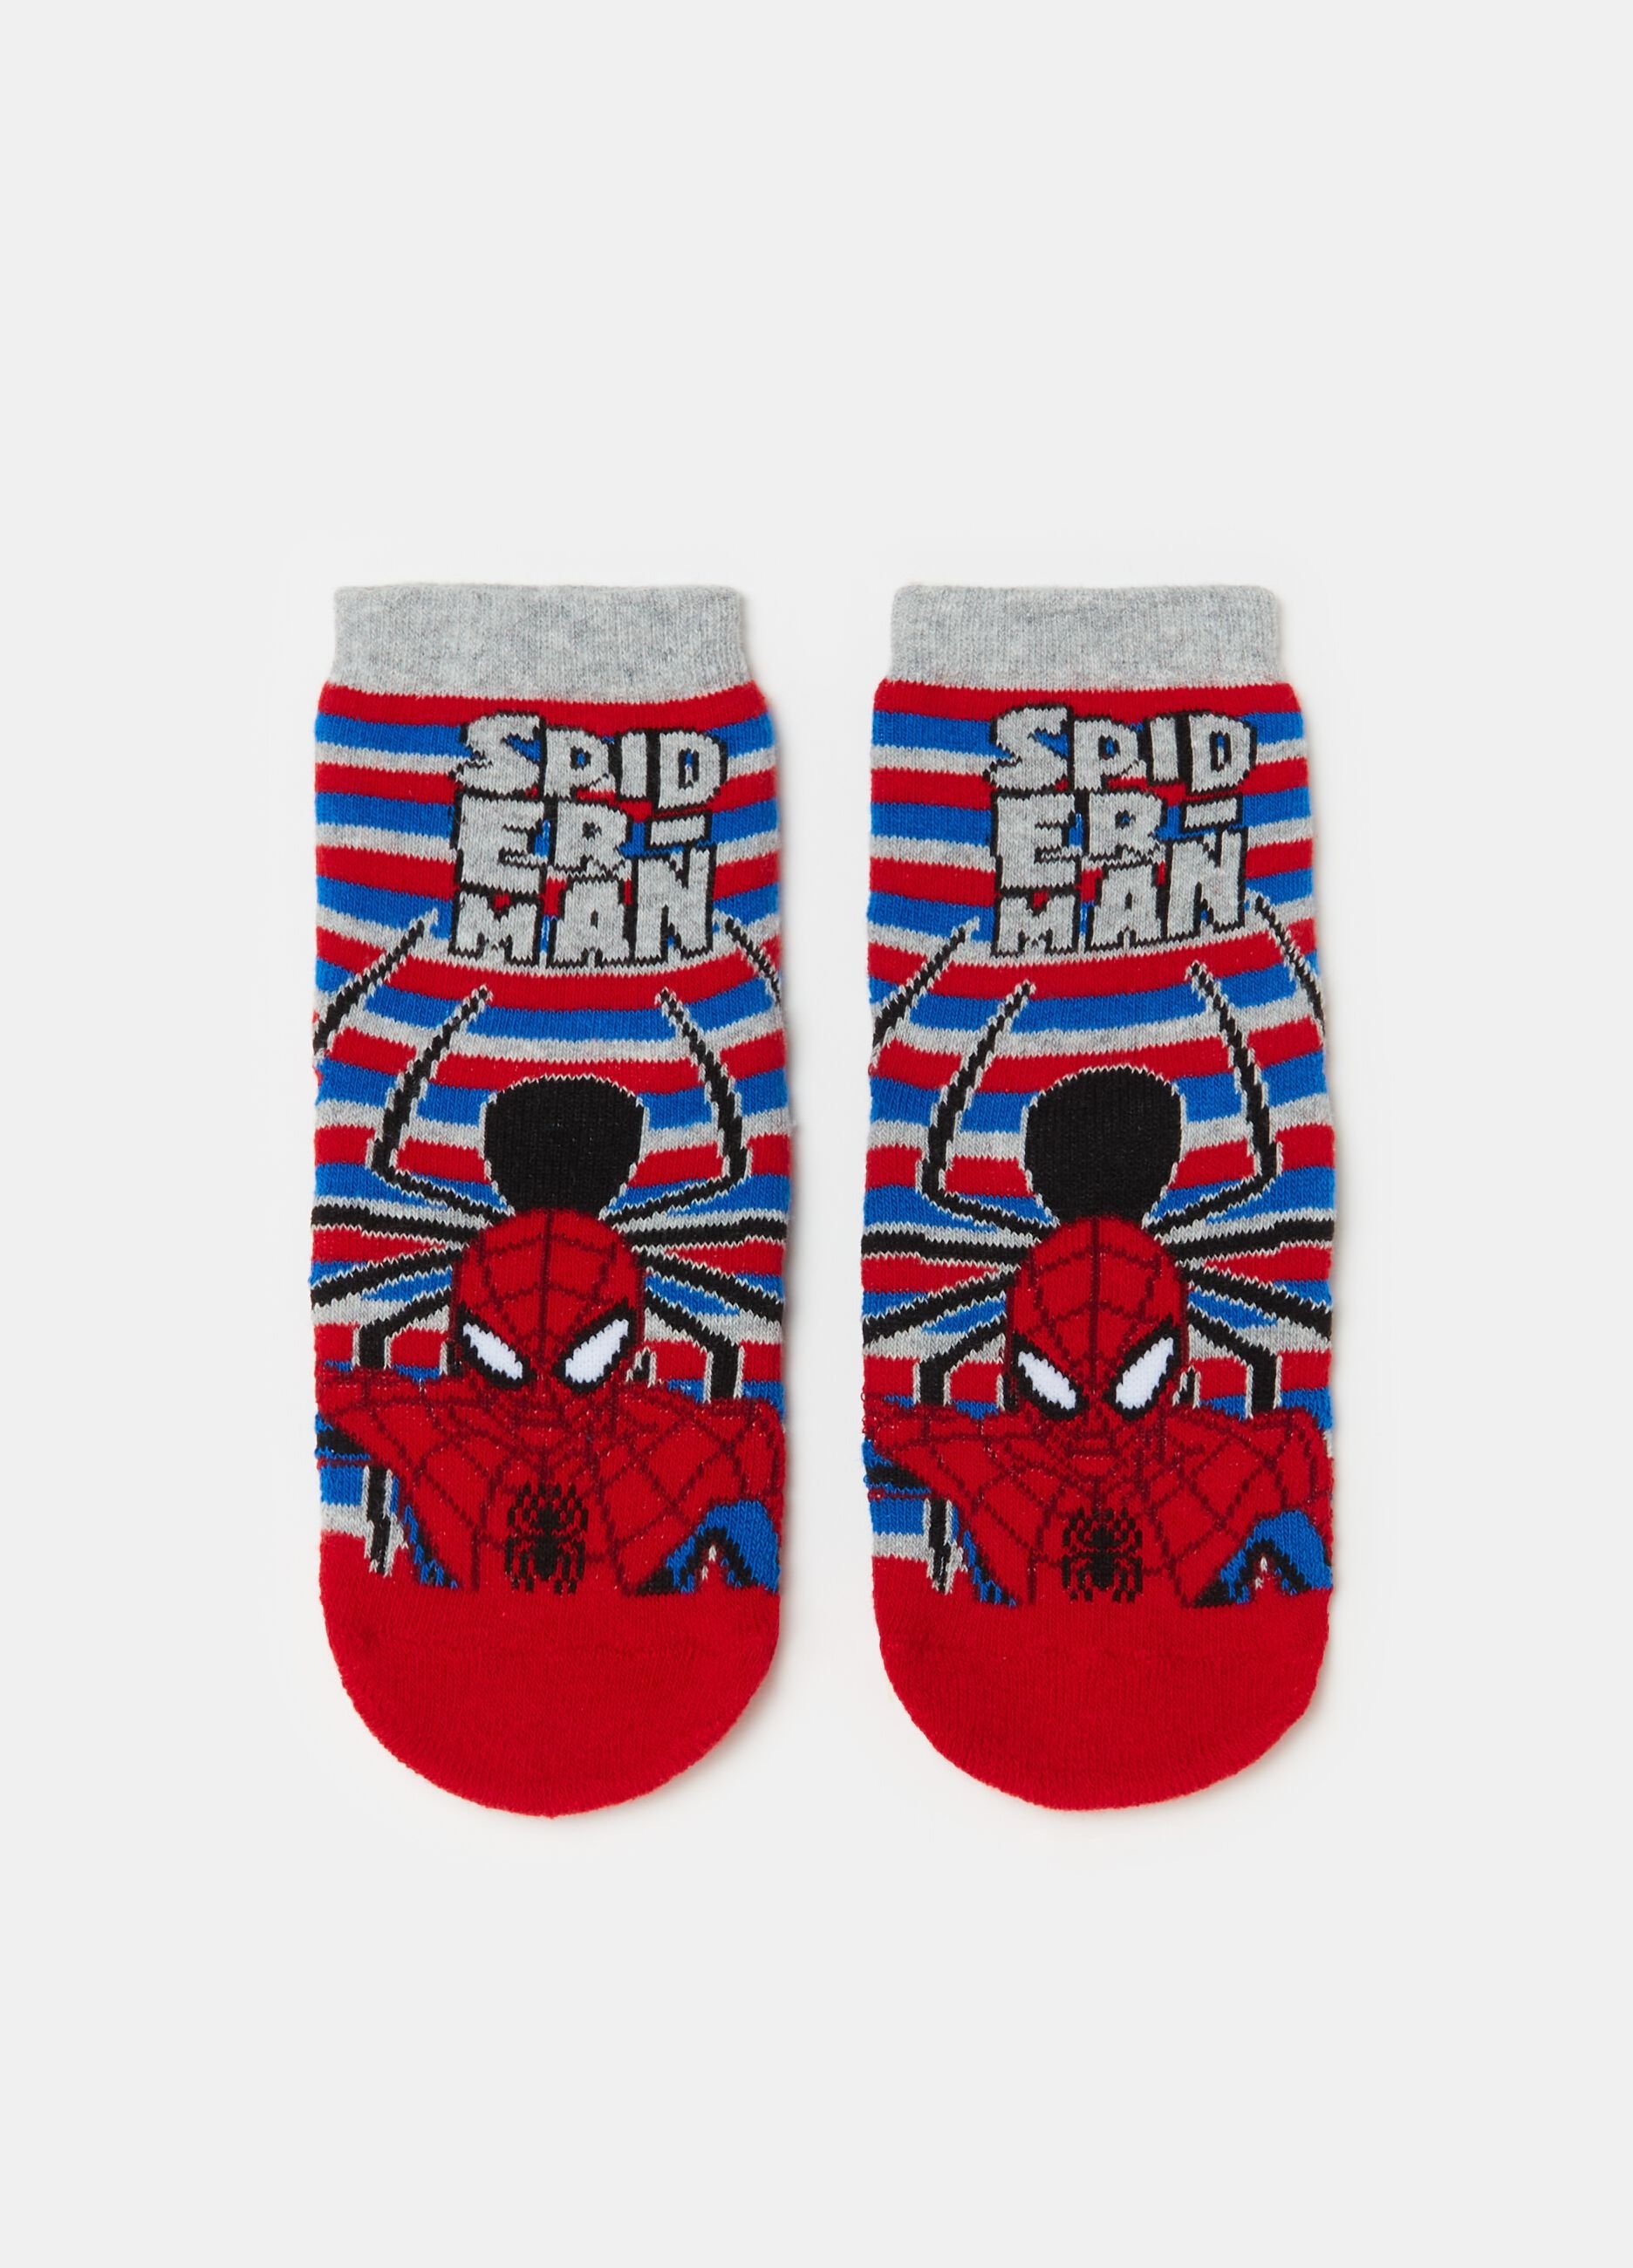 Calze antiscivolo con disegno Spider-Man